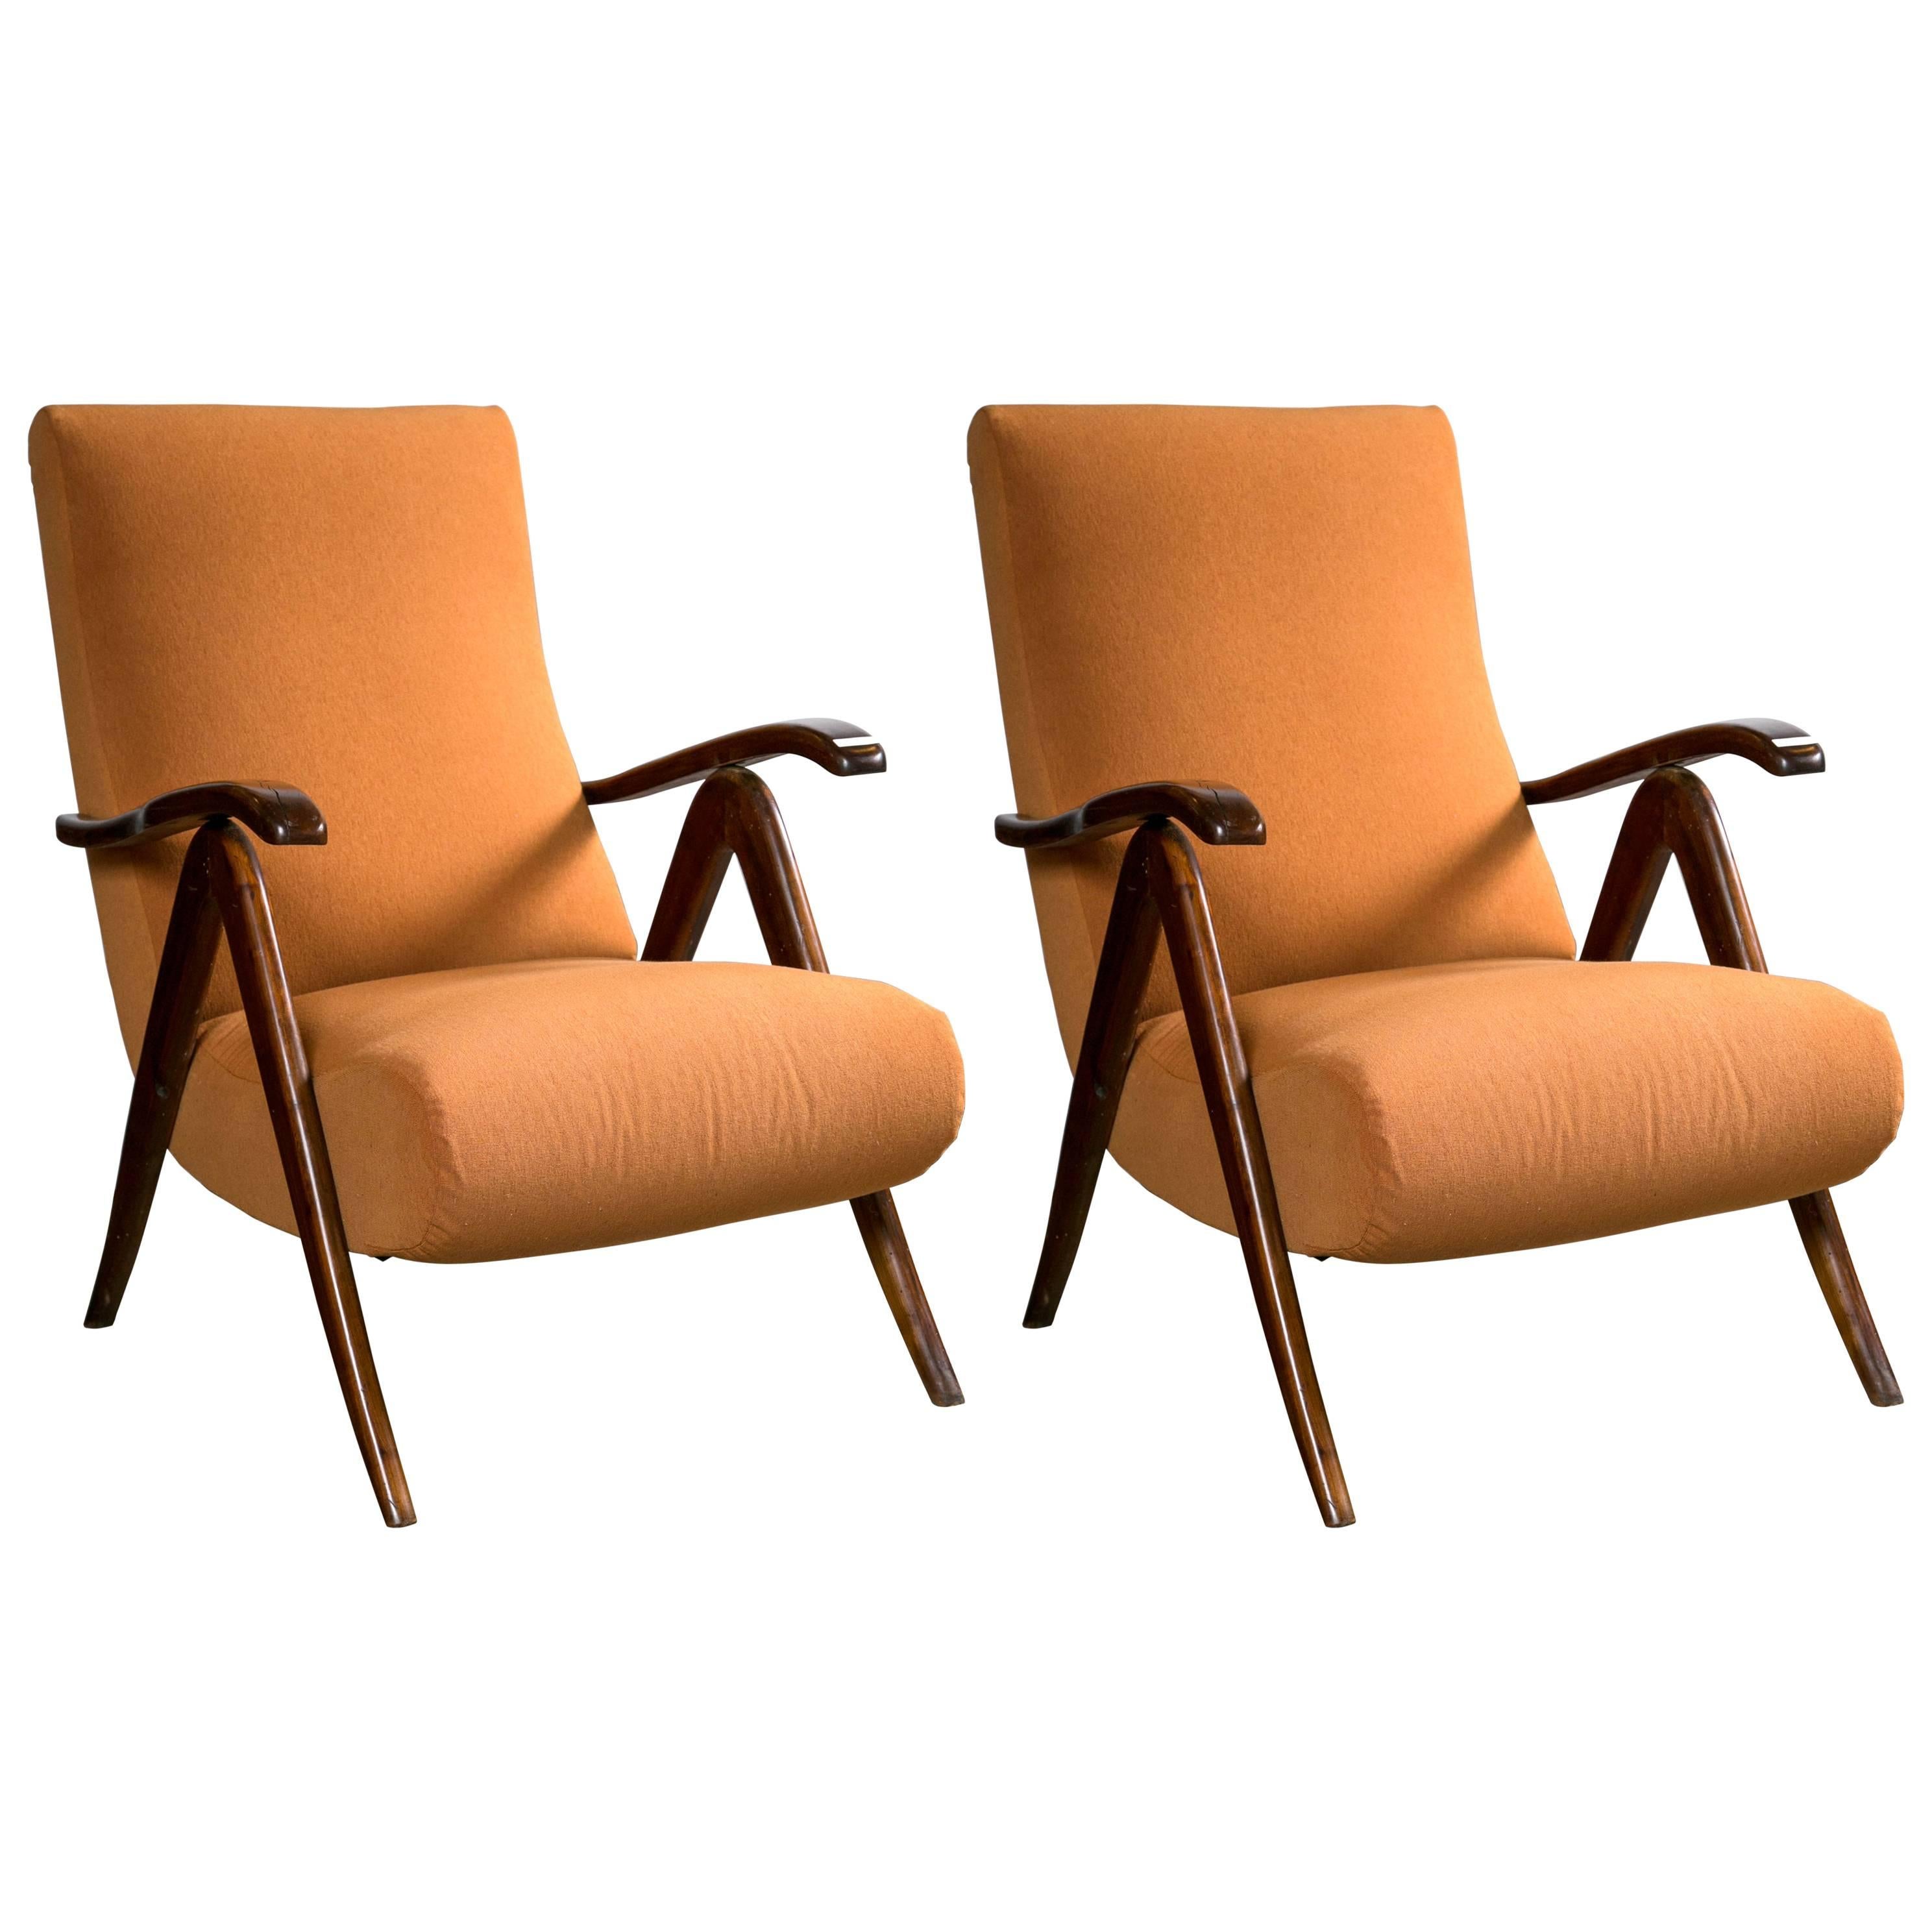 Pair of Italian Mid-Century Modern Reclining Lounge Chairs